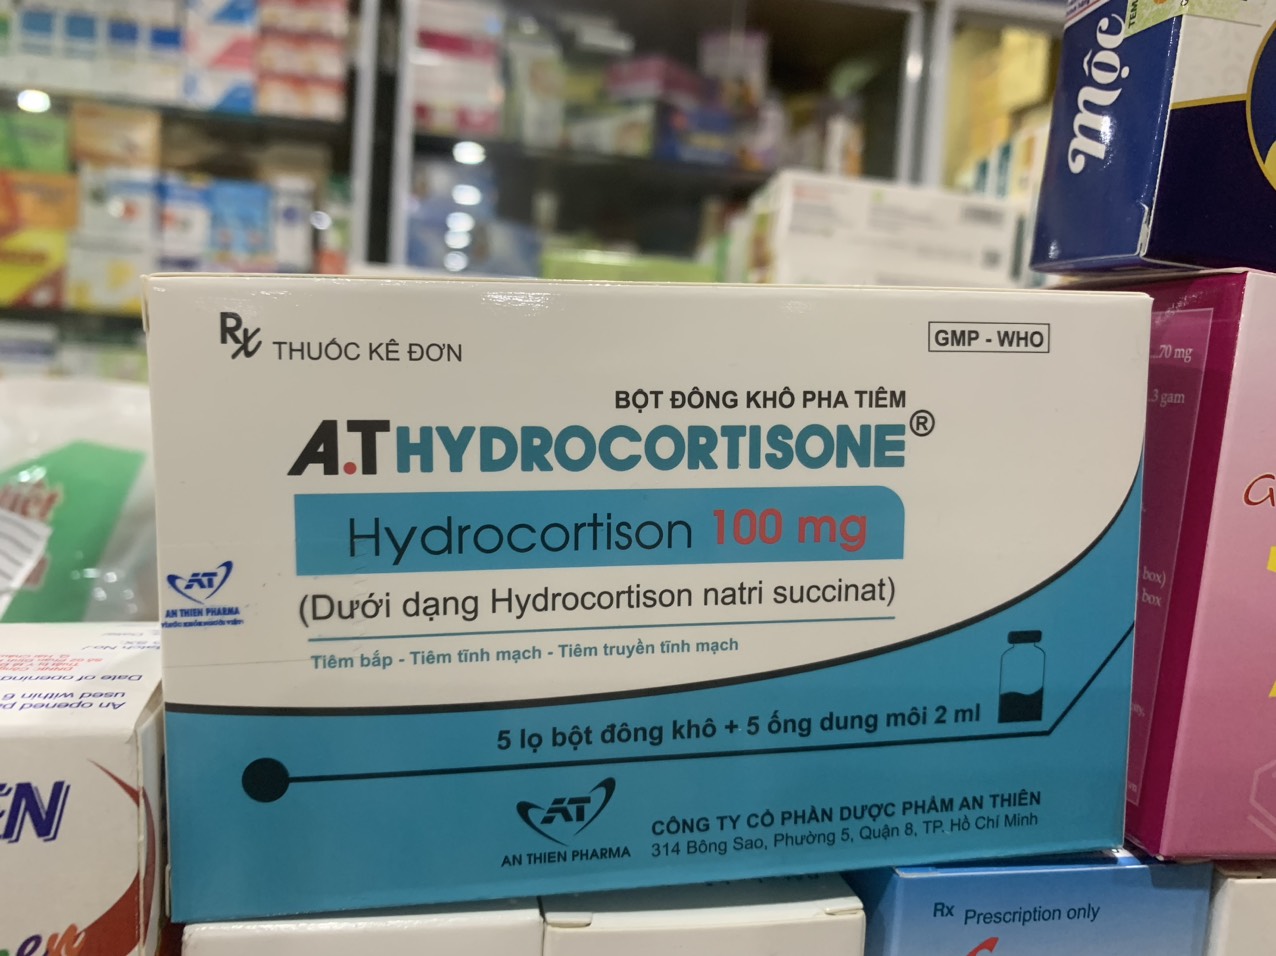 A.T Hydrocortisone 100mg